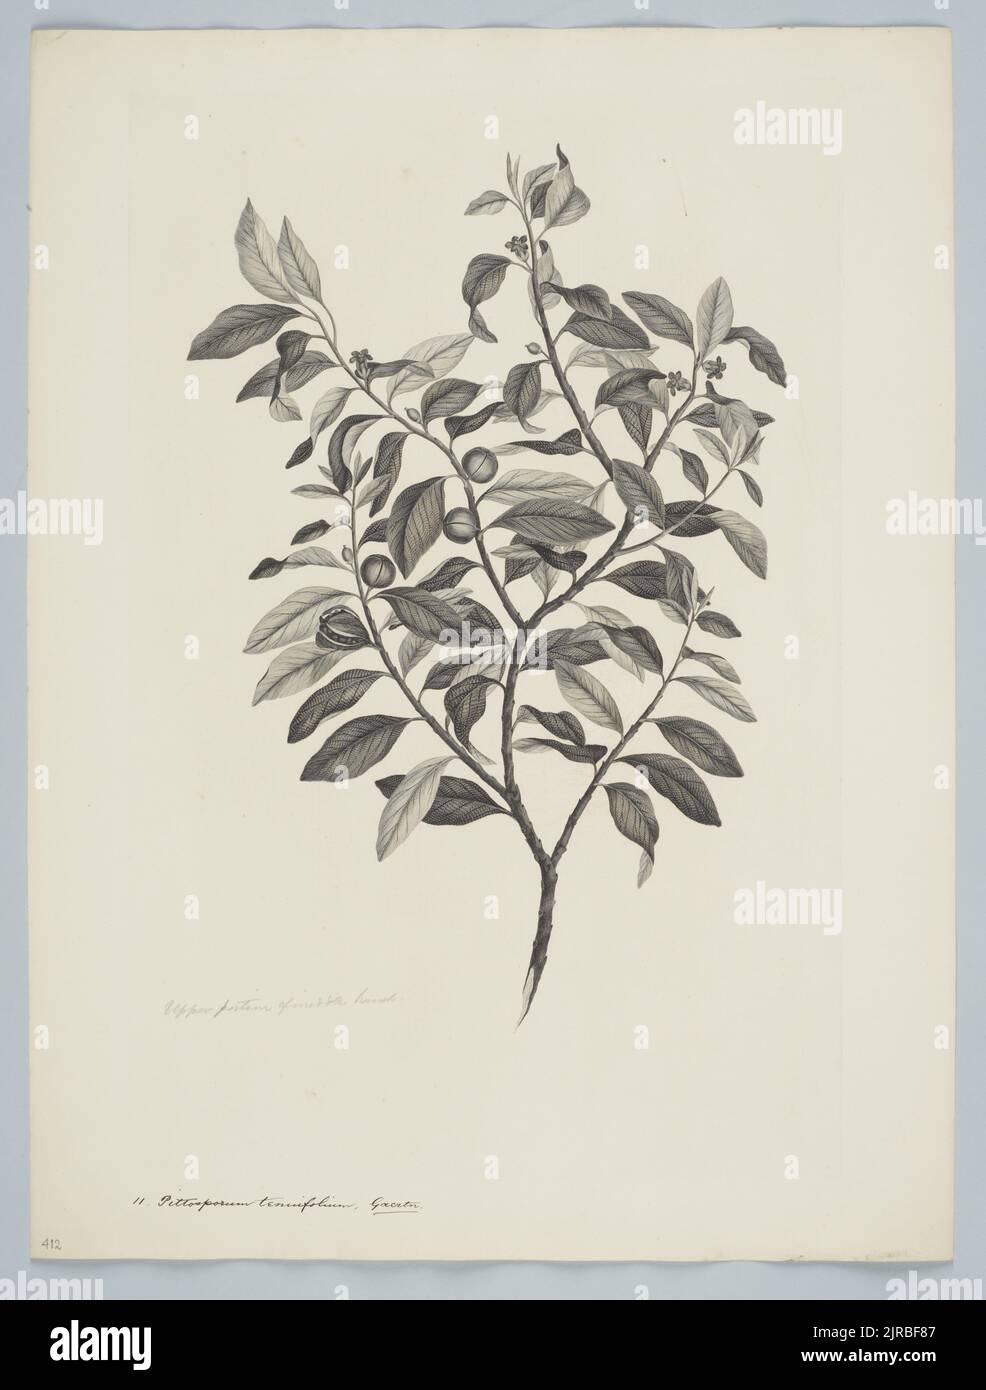 Pittosporum tenuifolium Banks & Solander ex Gaertner, 1770, by Sydney Parkinson, Daniel MacKenzie. Gift of the British Museum, 1895. Stock Photo